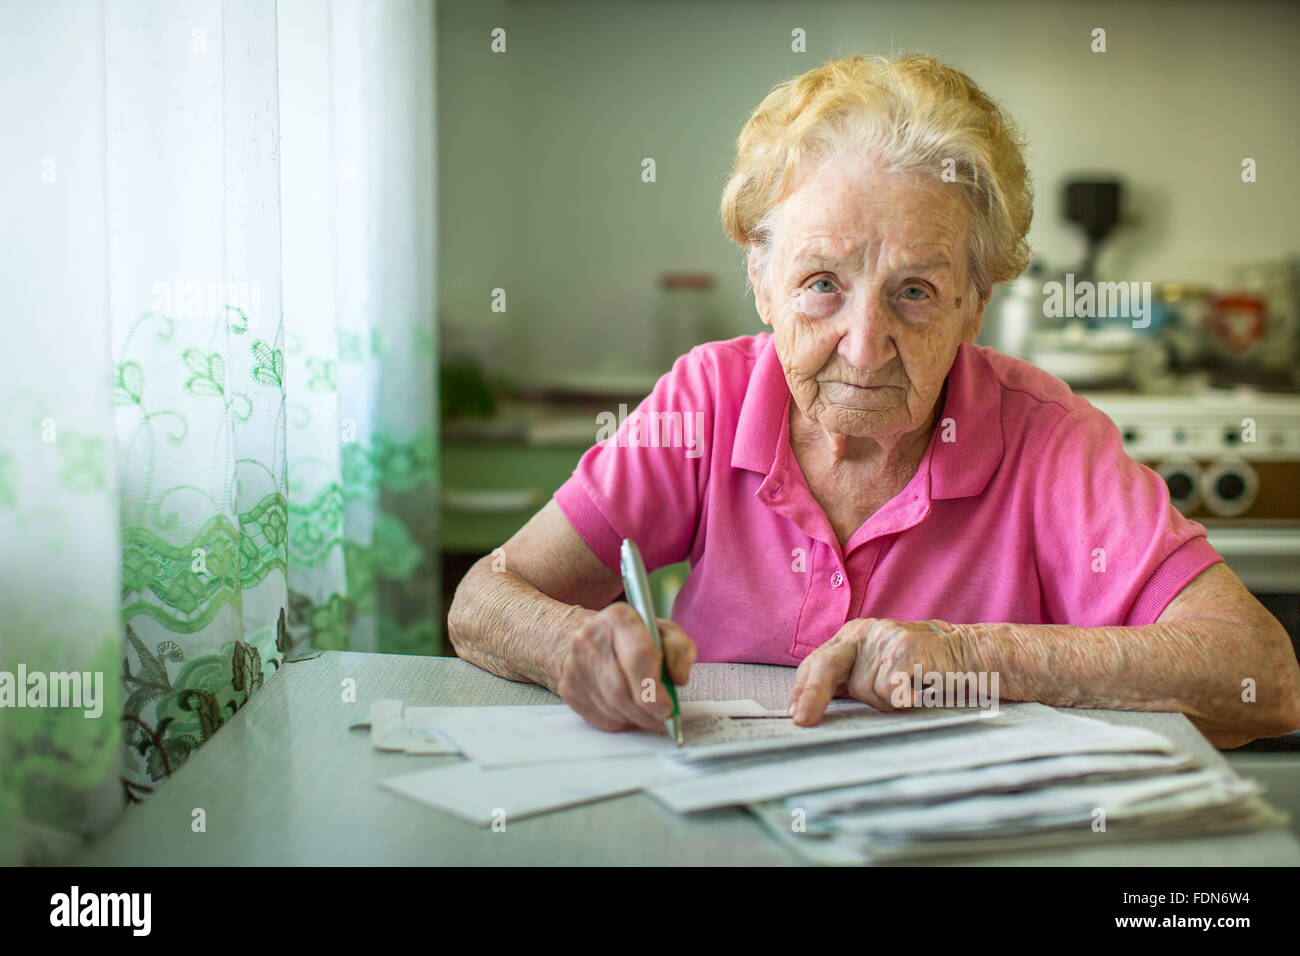 An elderly woman fills in utility bills. Stock Photo